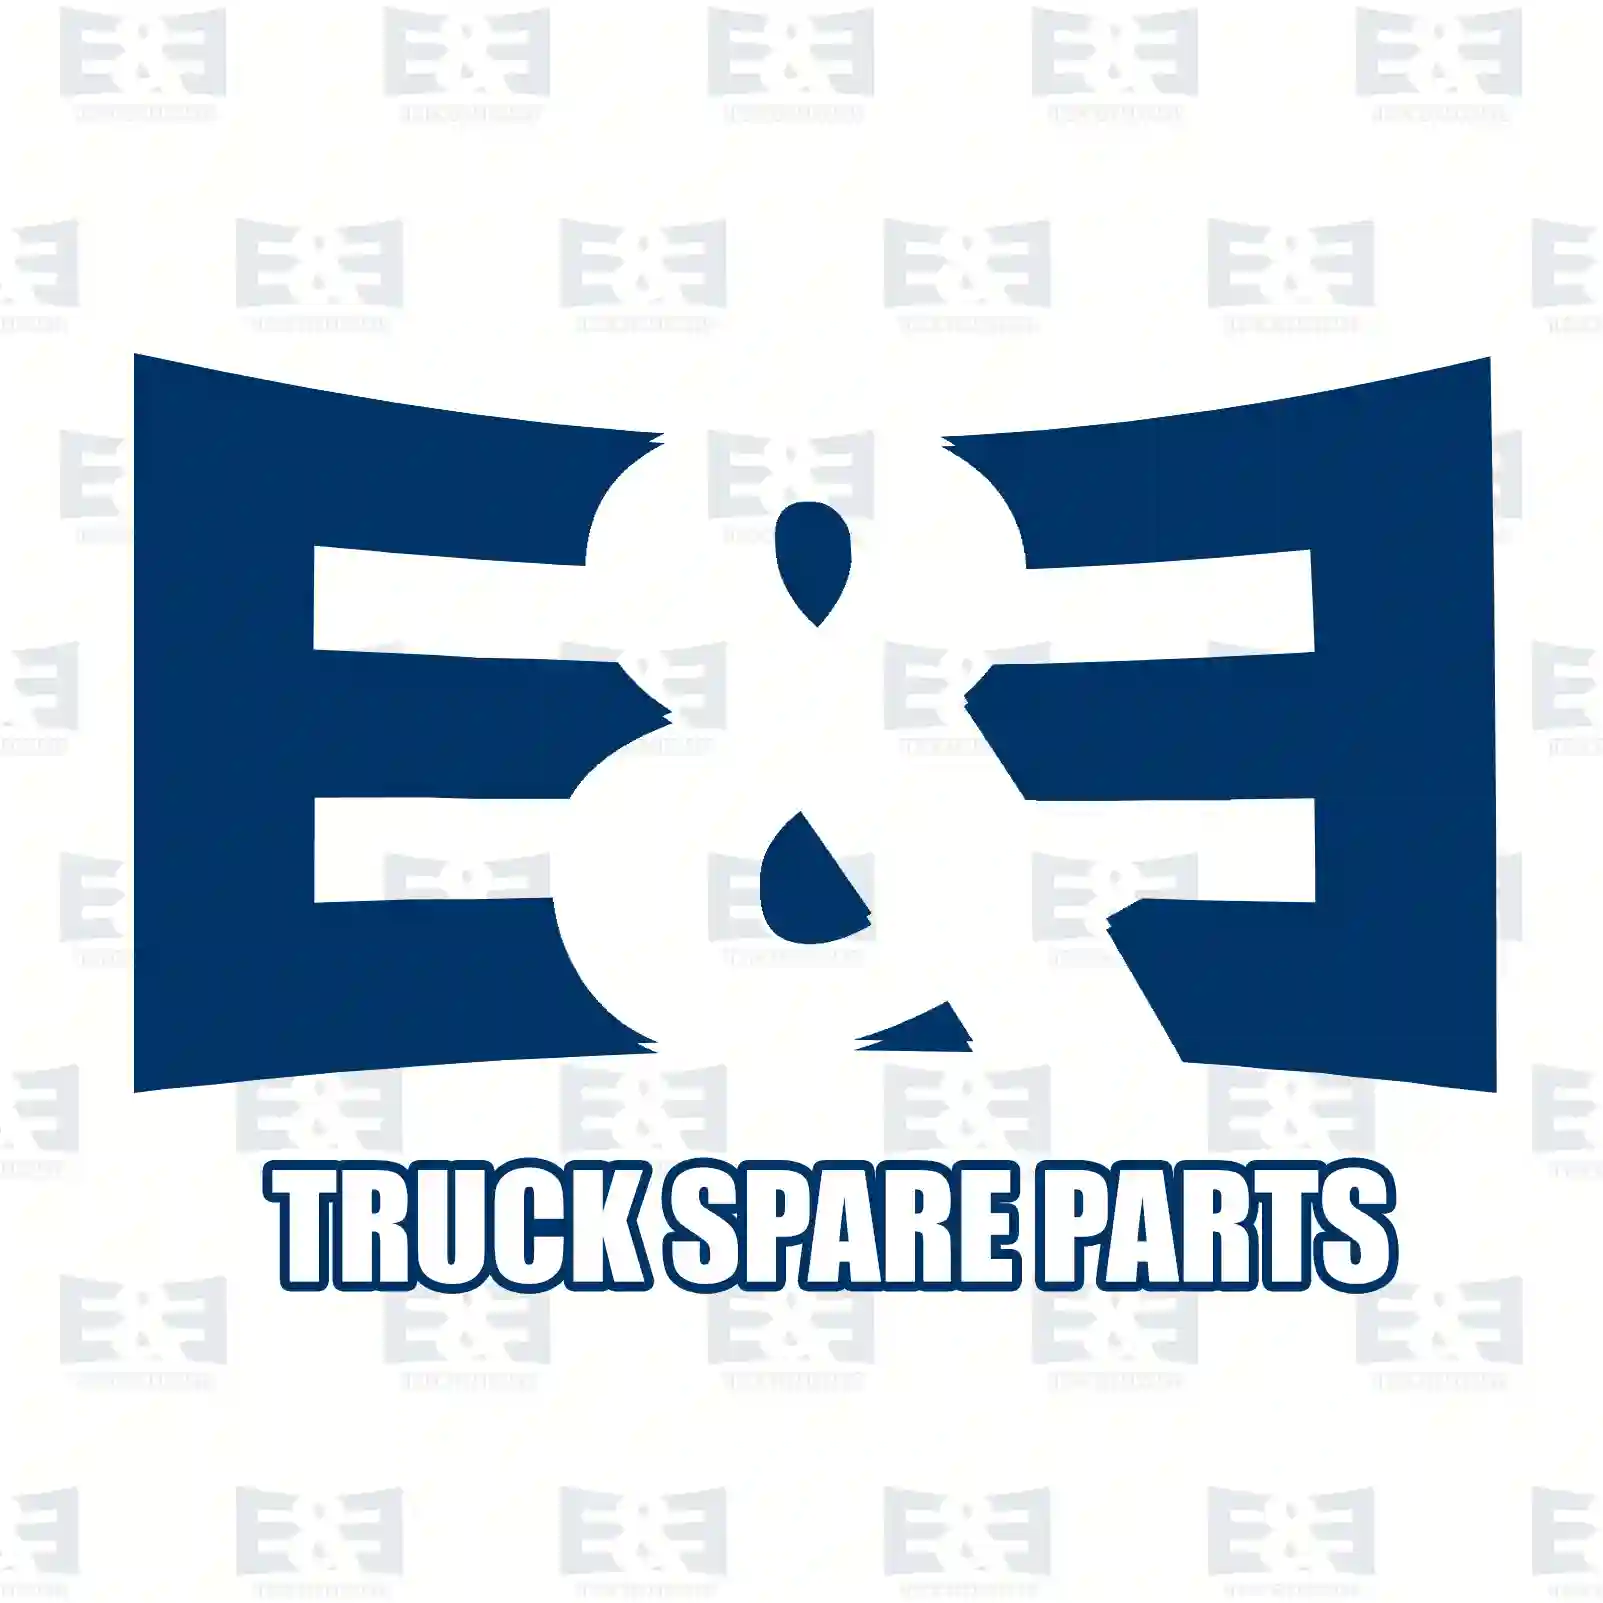 Ball joint set, 2E2277989, 0002684889S ||  2E2277989 E&E Truck Spare Parts | Truck Spare Parts, Auotomotive Spare Parts Ball joint set, 2E2277989, 0002684889S ||  2E2277989 E&E Truck Spare Parts | Truck Spare Parts, Auotomotive Spare Parts